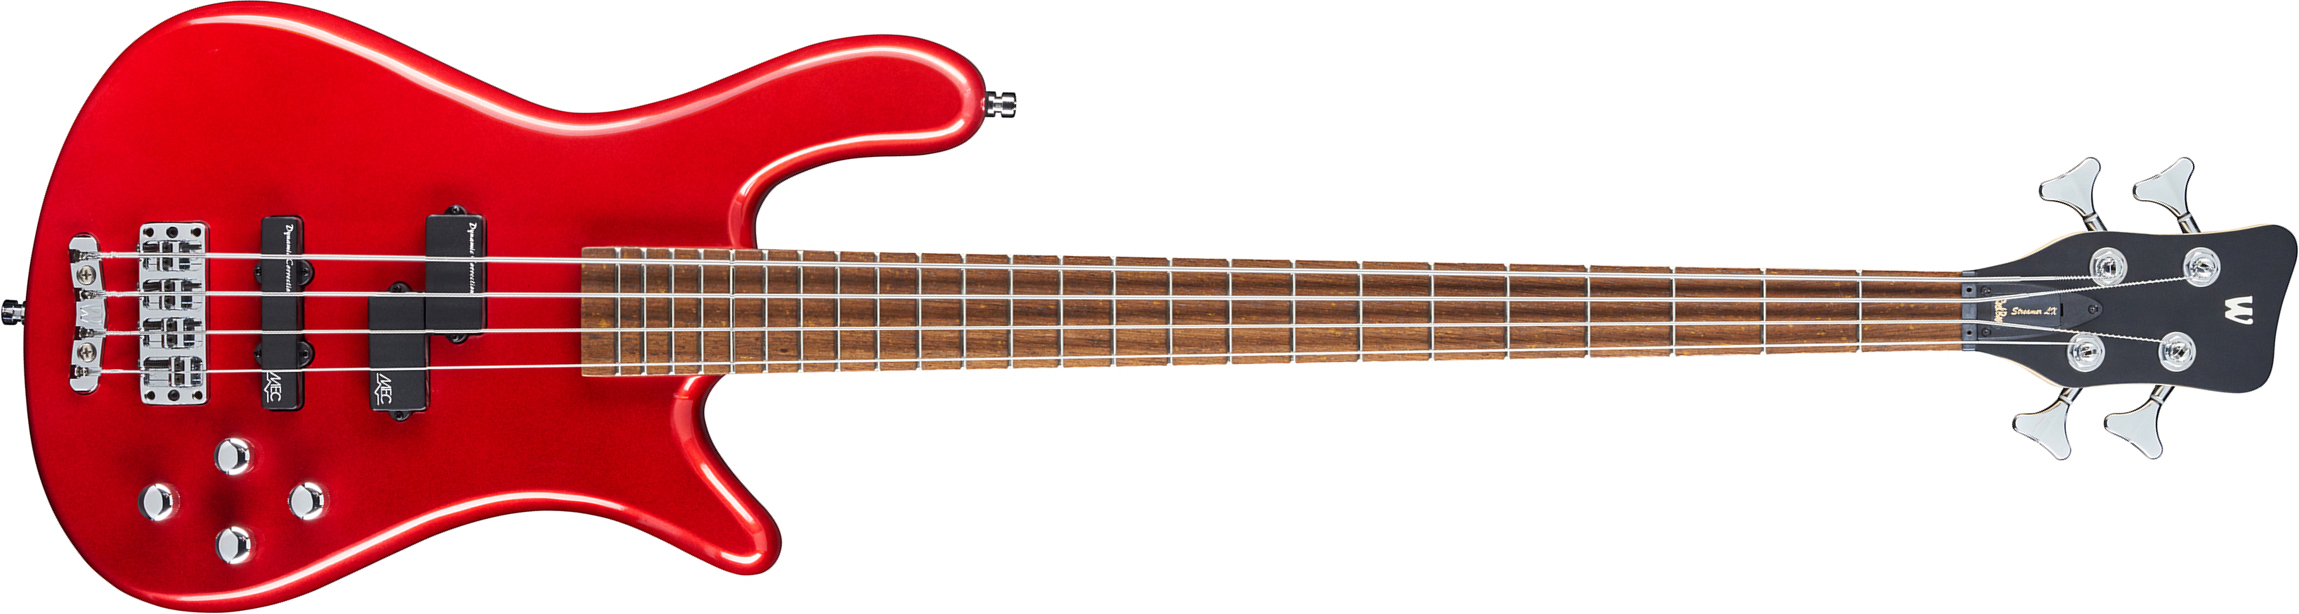 Warwick Streamer Lx4 Rockbass Active Wen - Red Metallic - Solid body elektrische bas - Main picture